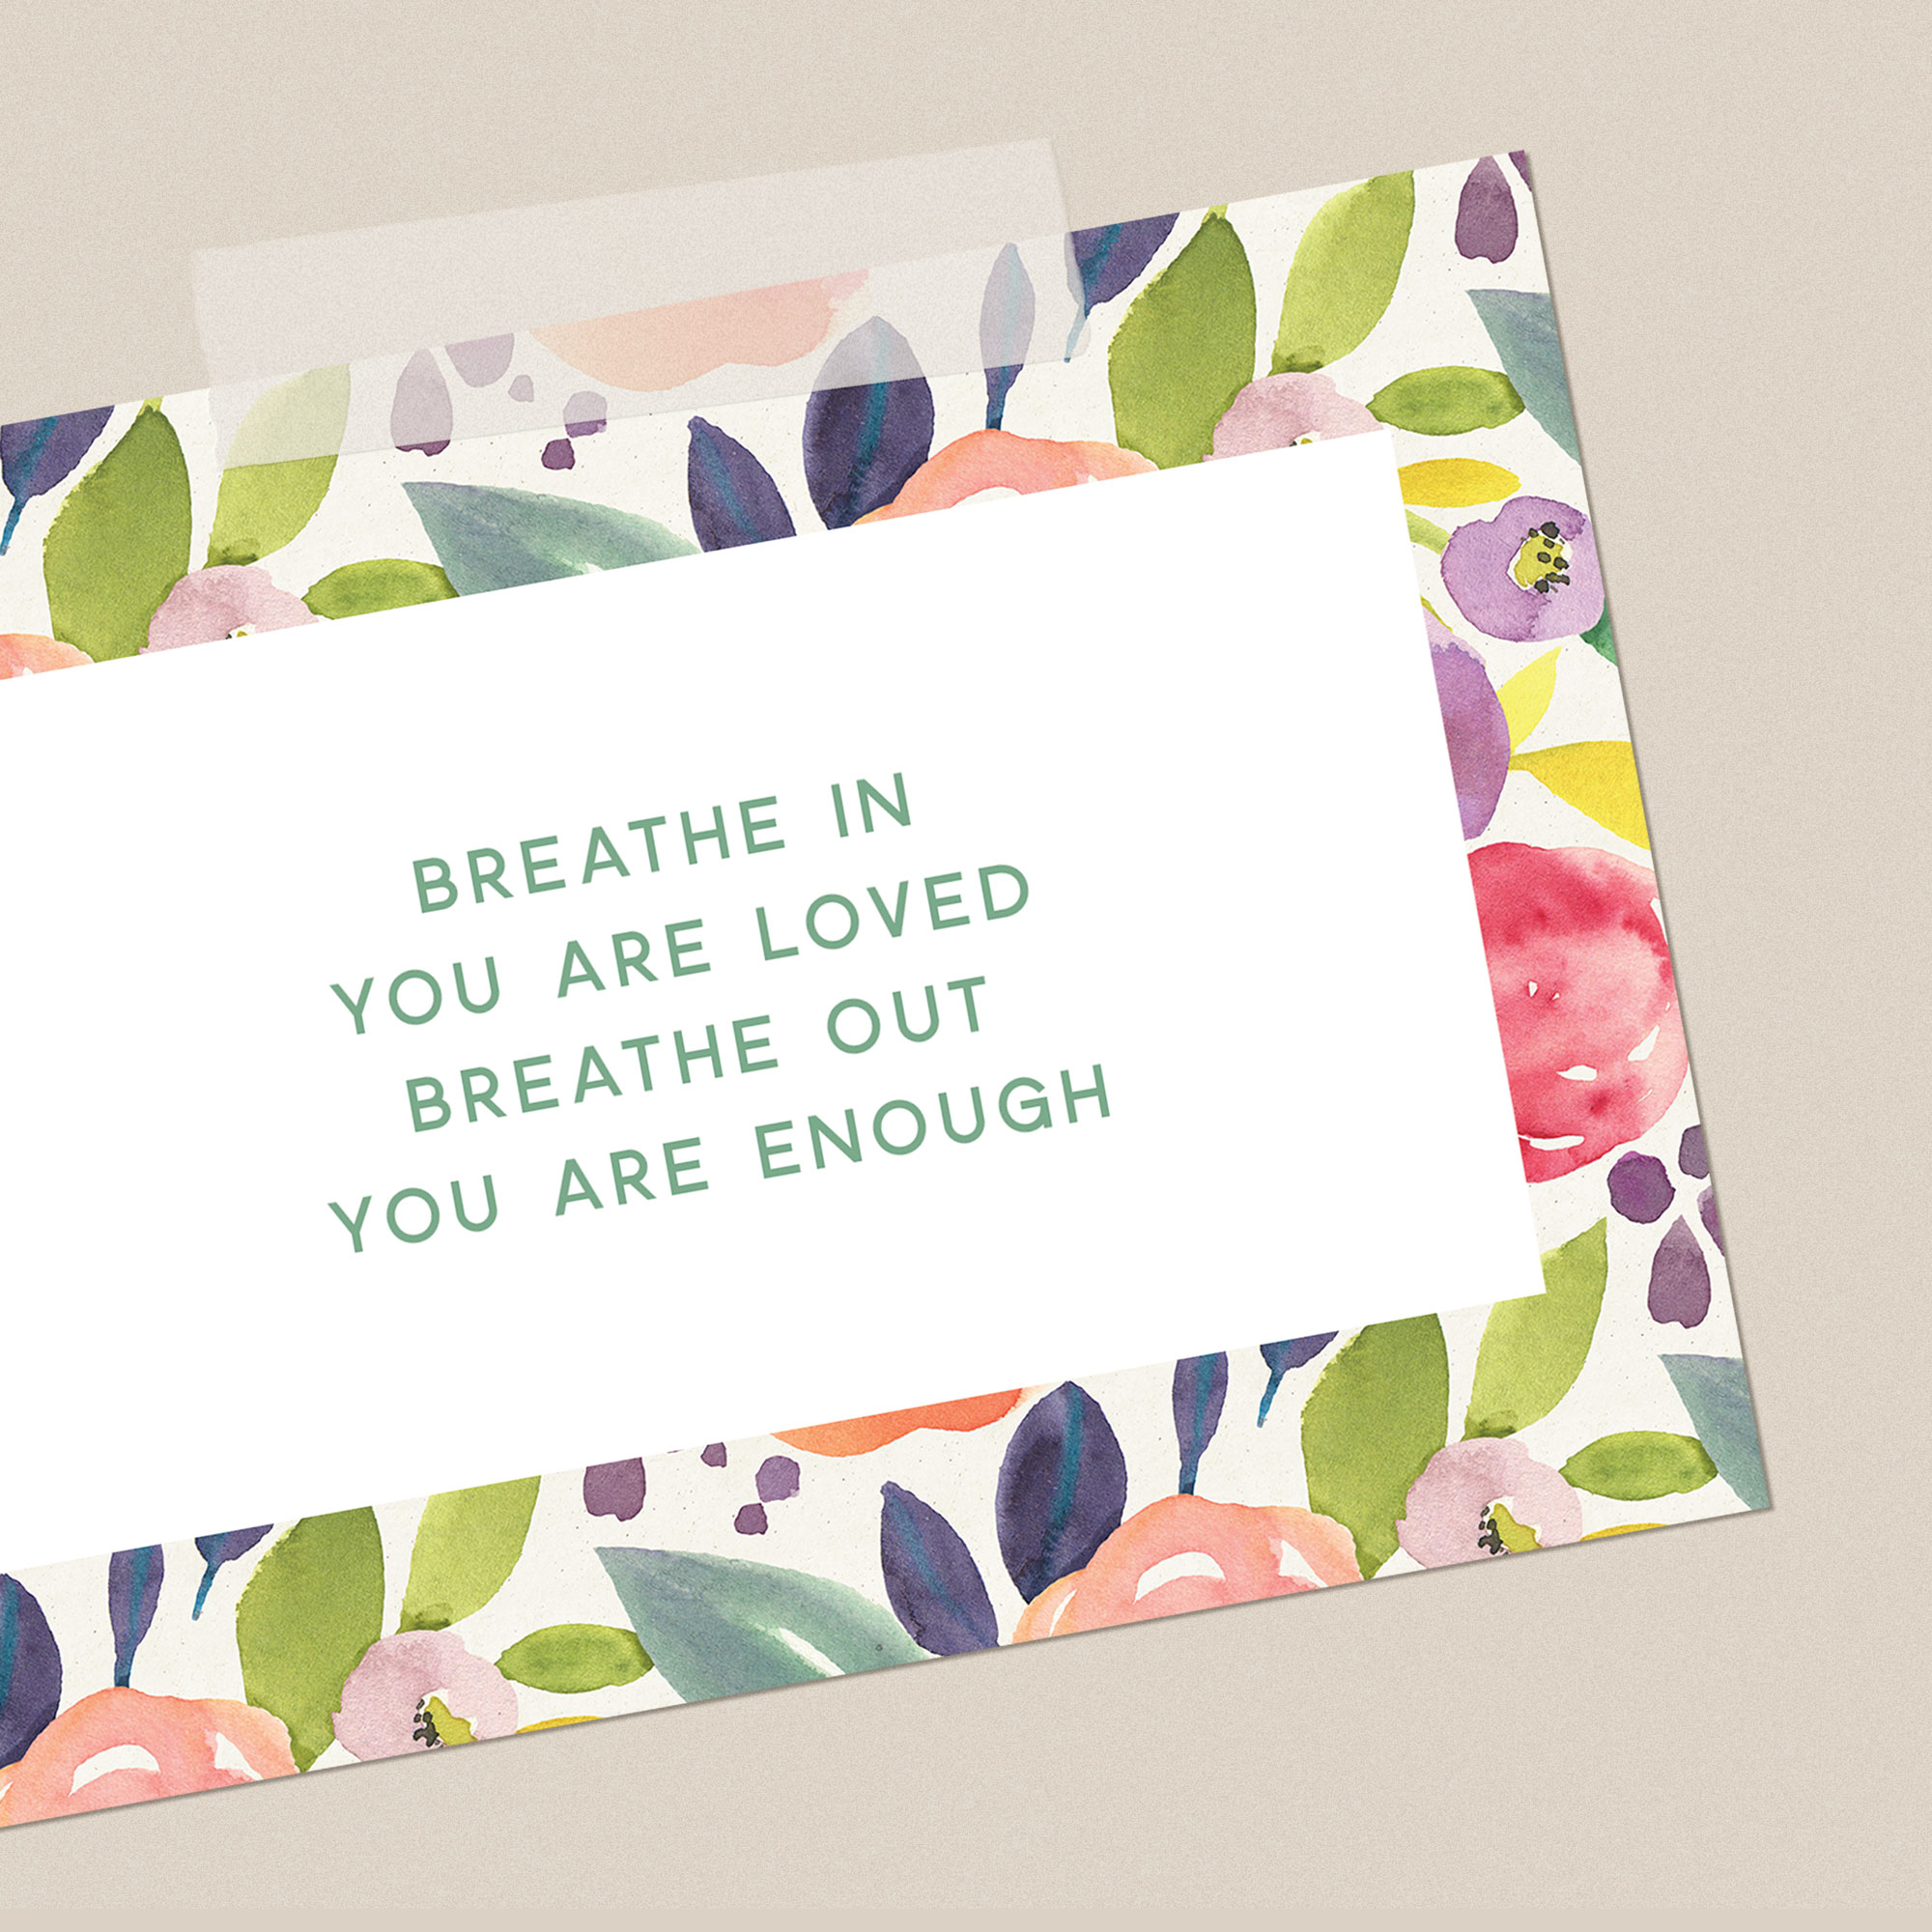 Printable Encouragement Cards